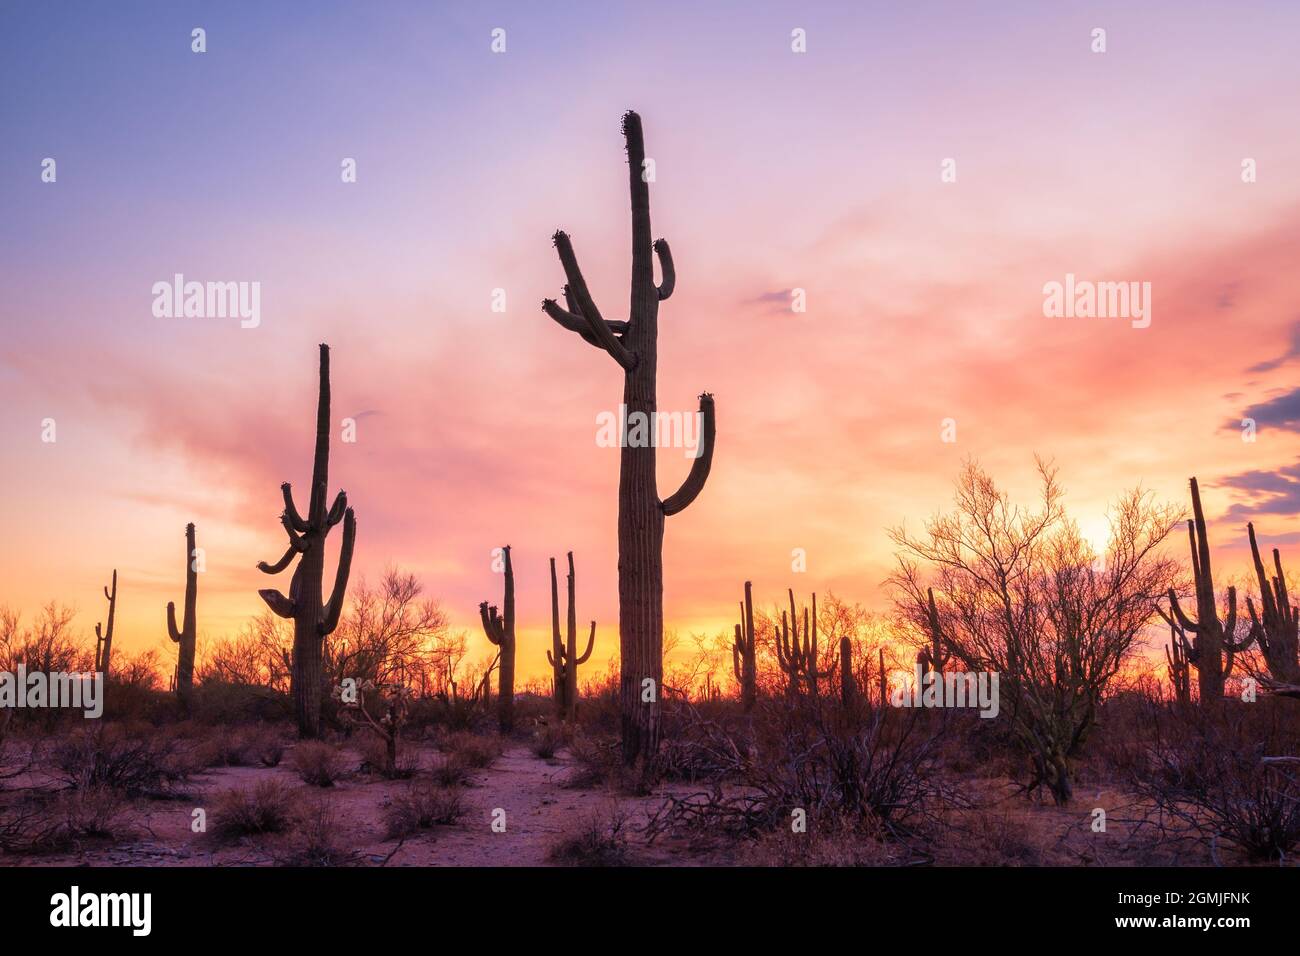 Saguaros in Arizona desert at sunset Stock Photo - Alamy